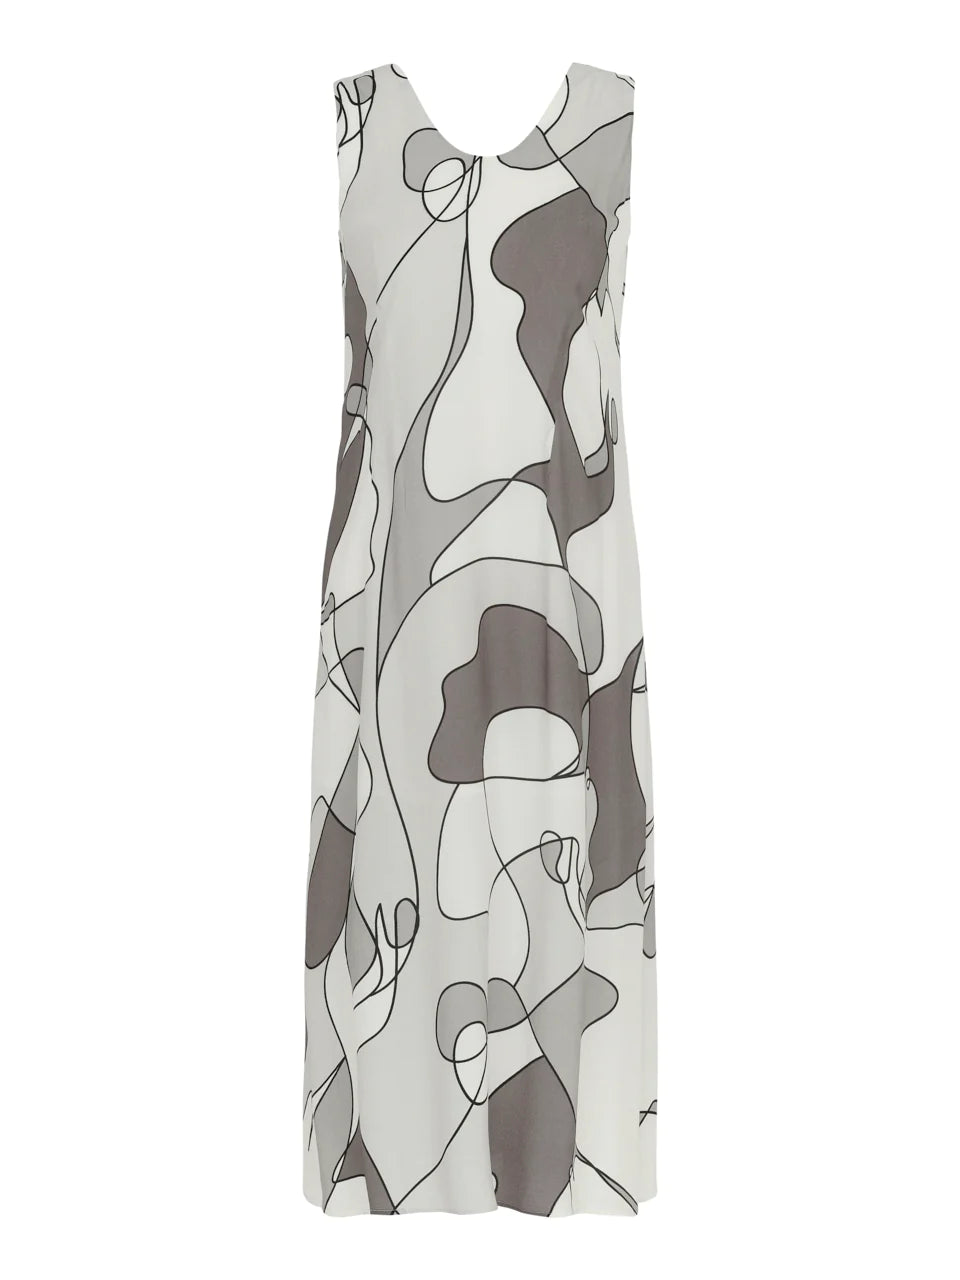 Gaufre Fabolus Print Sleeveless Dress